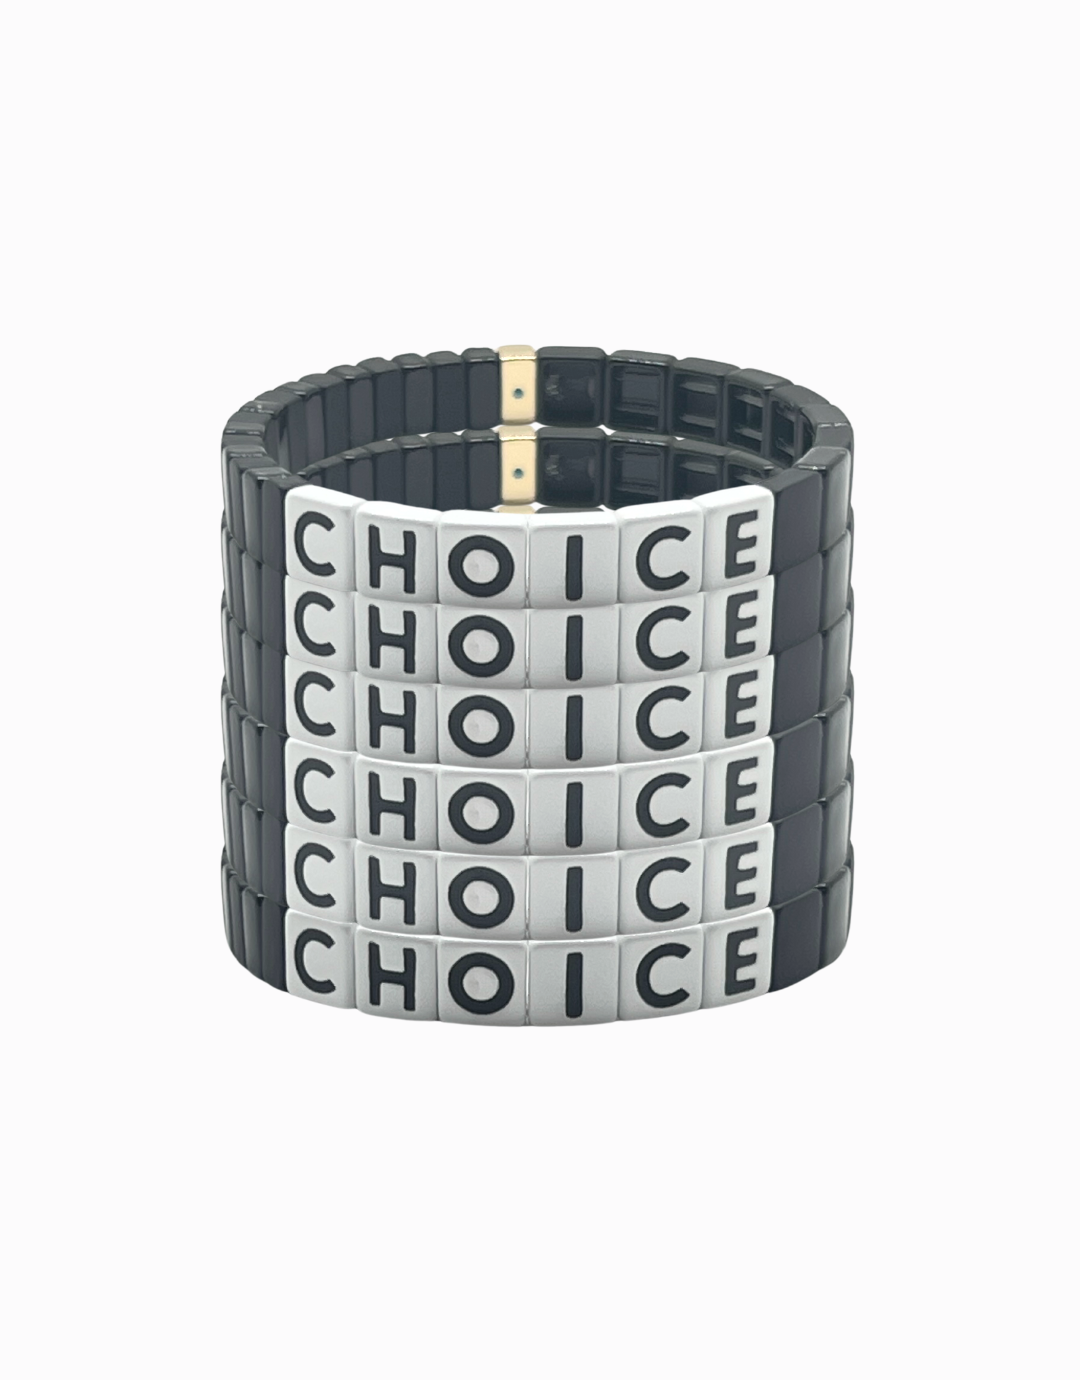 Roxanne Assoulin x Social Goods Choice Bracelet - Black